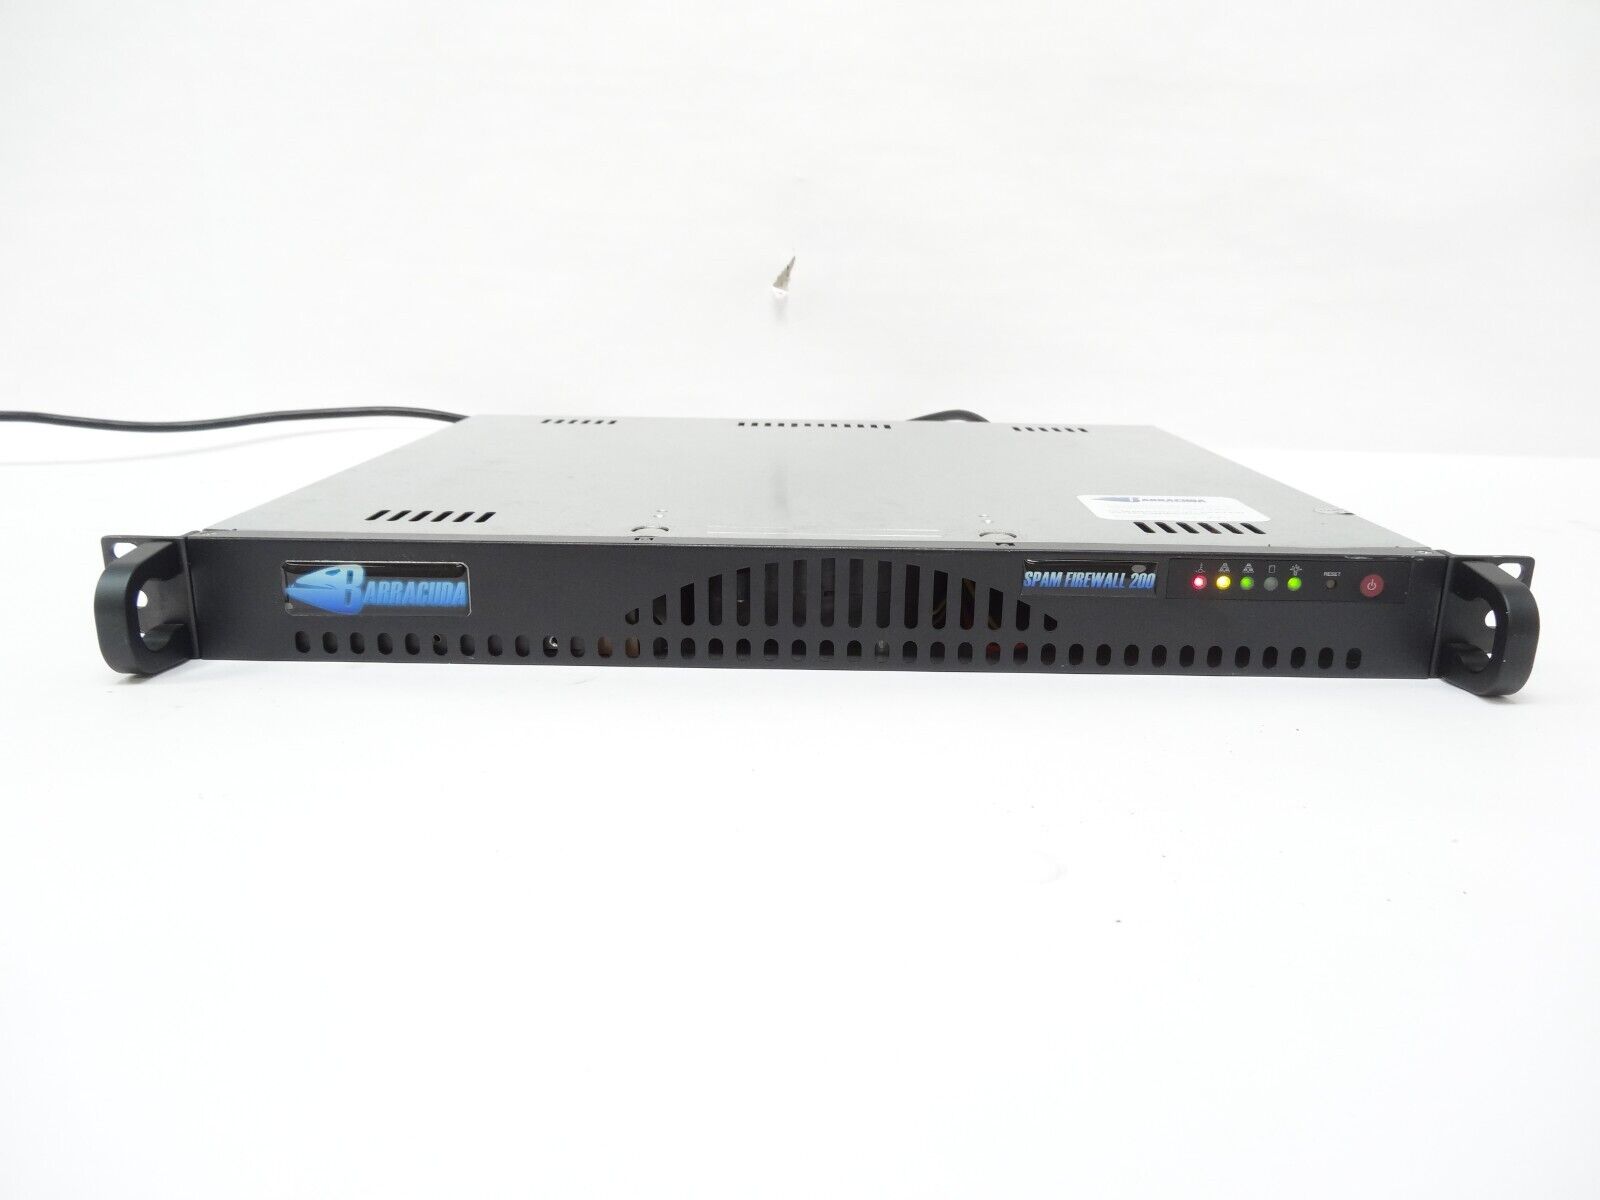 Barracuda Networks Spam Firewall 200 Virus Security Appliance BSF300a